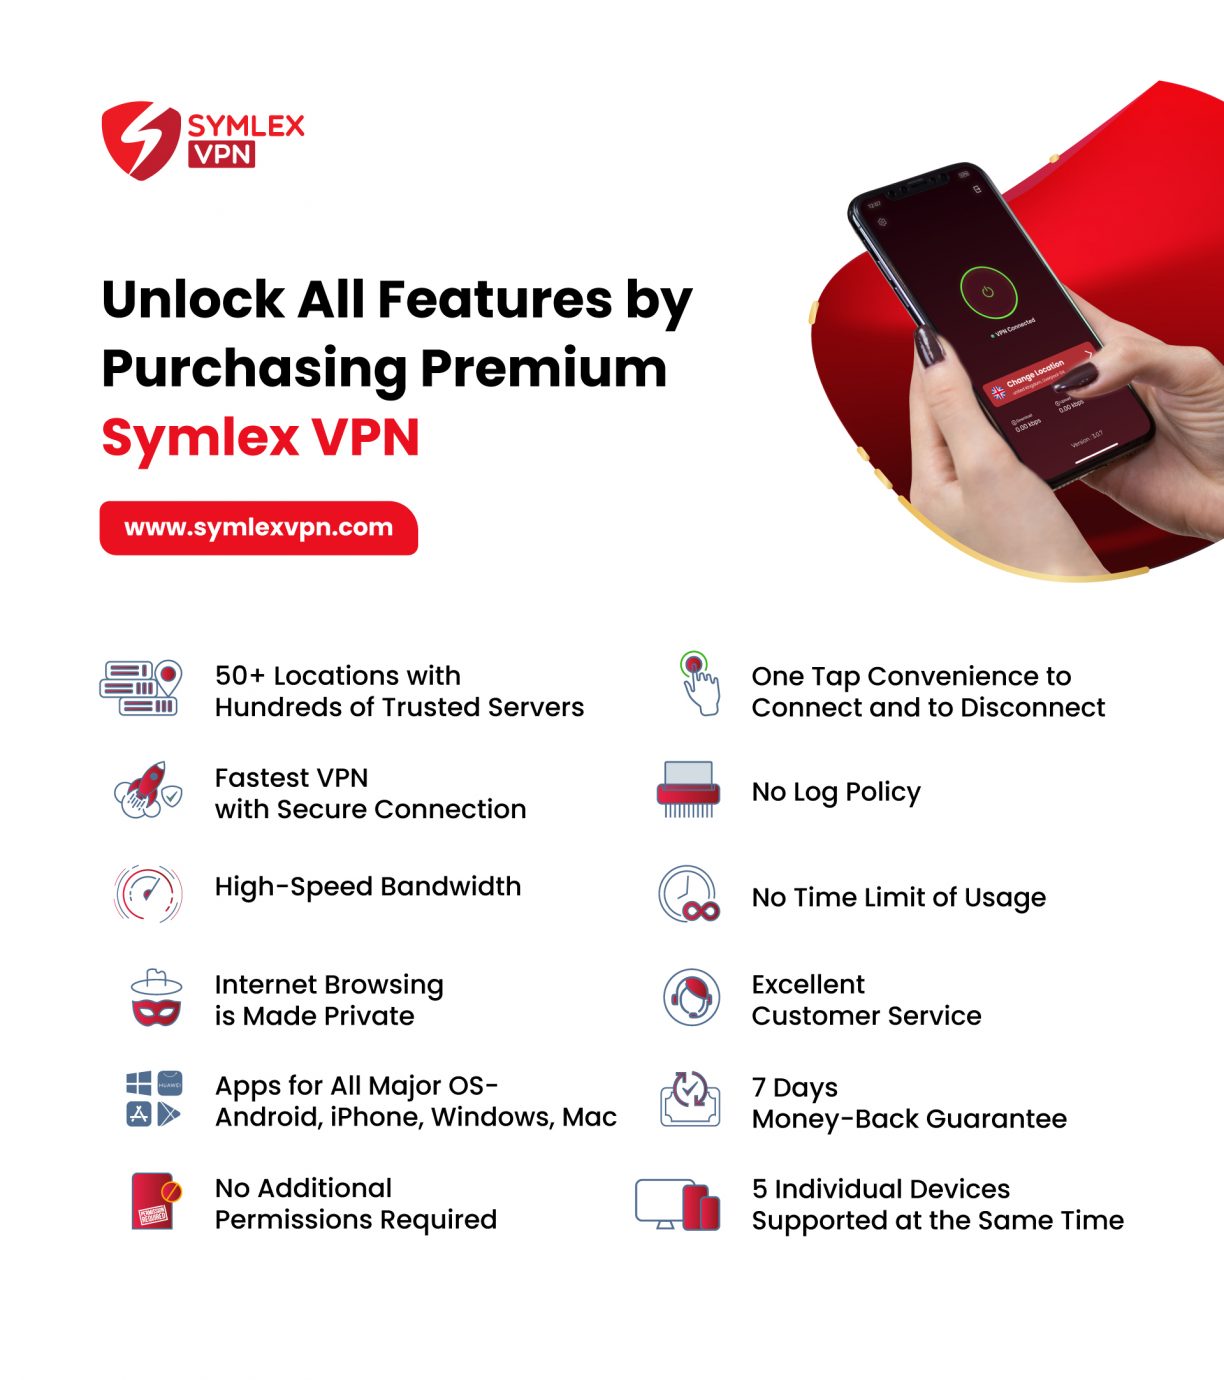 Symlex VPN features